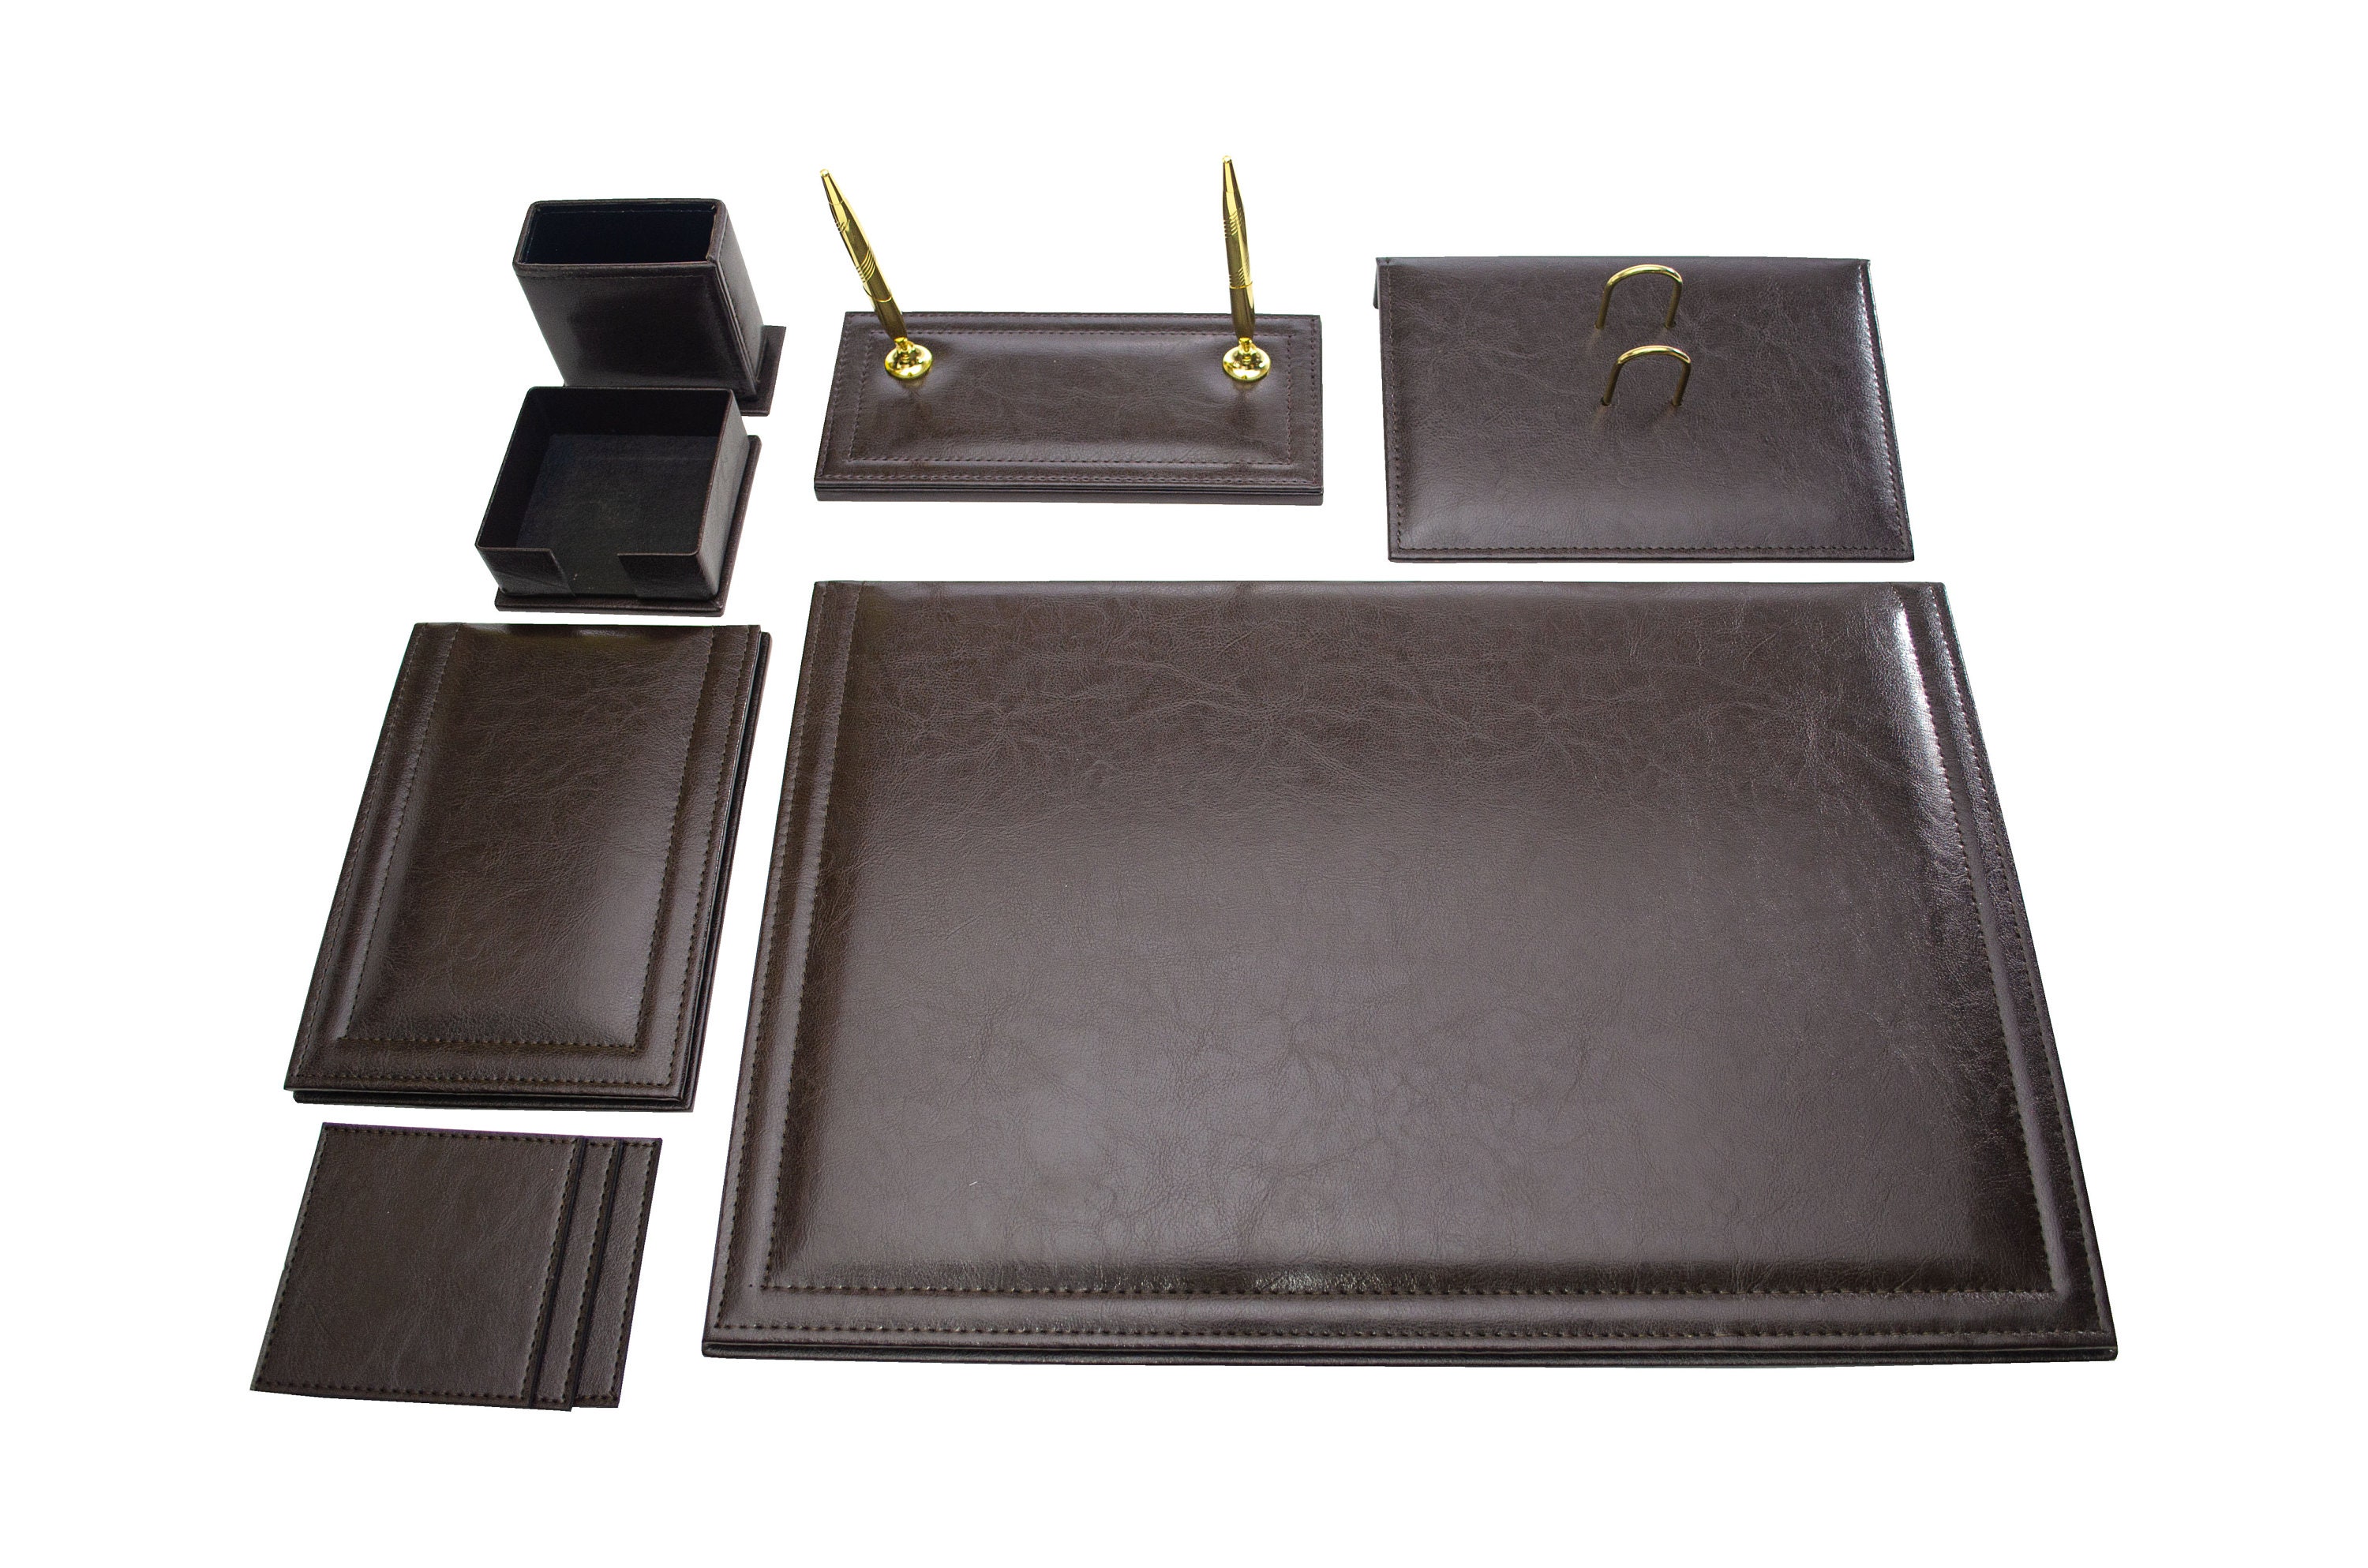 Leather Desk Set - Leather Organizer Desk Set - Walnut Wood Desk Set -  Office Product - Desk Accessories Set - 11 PCS (Black) 